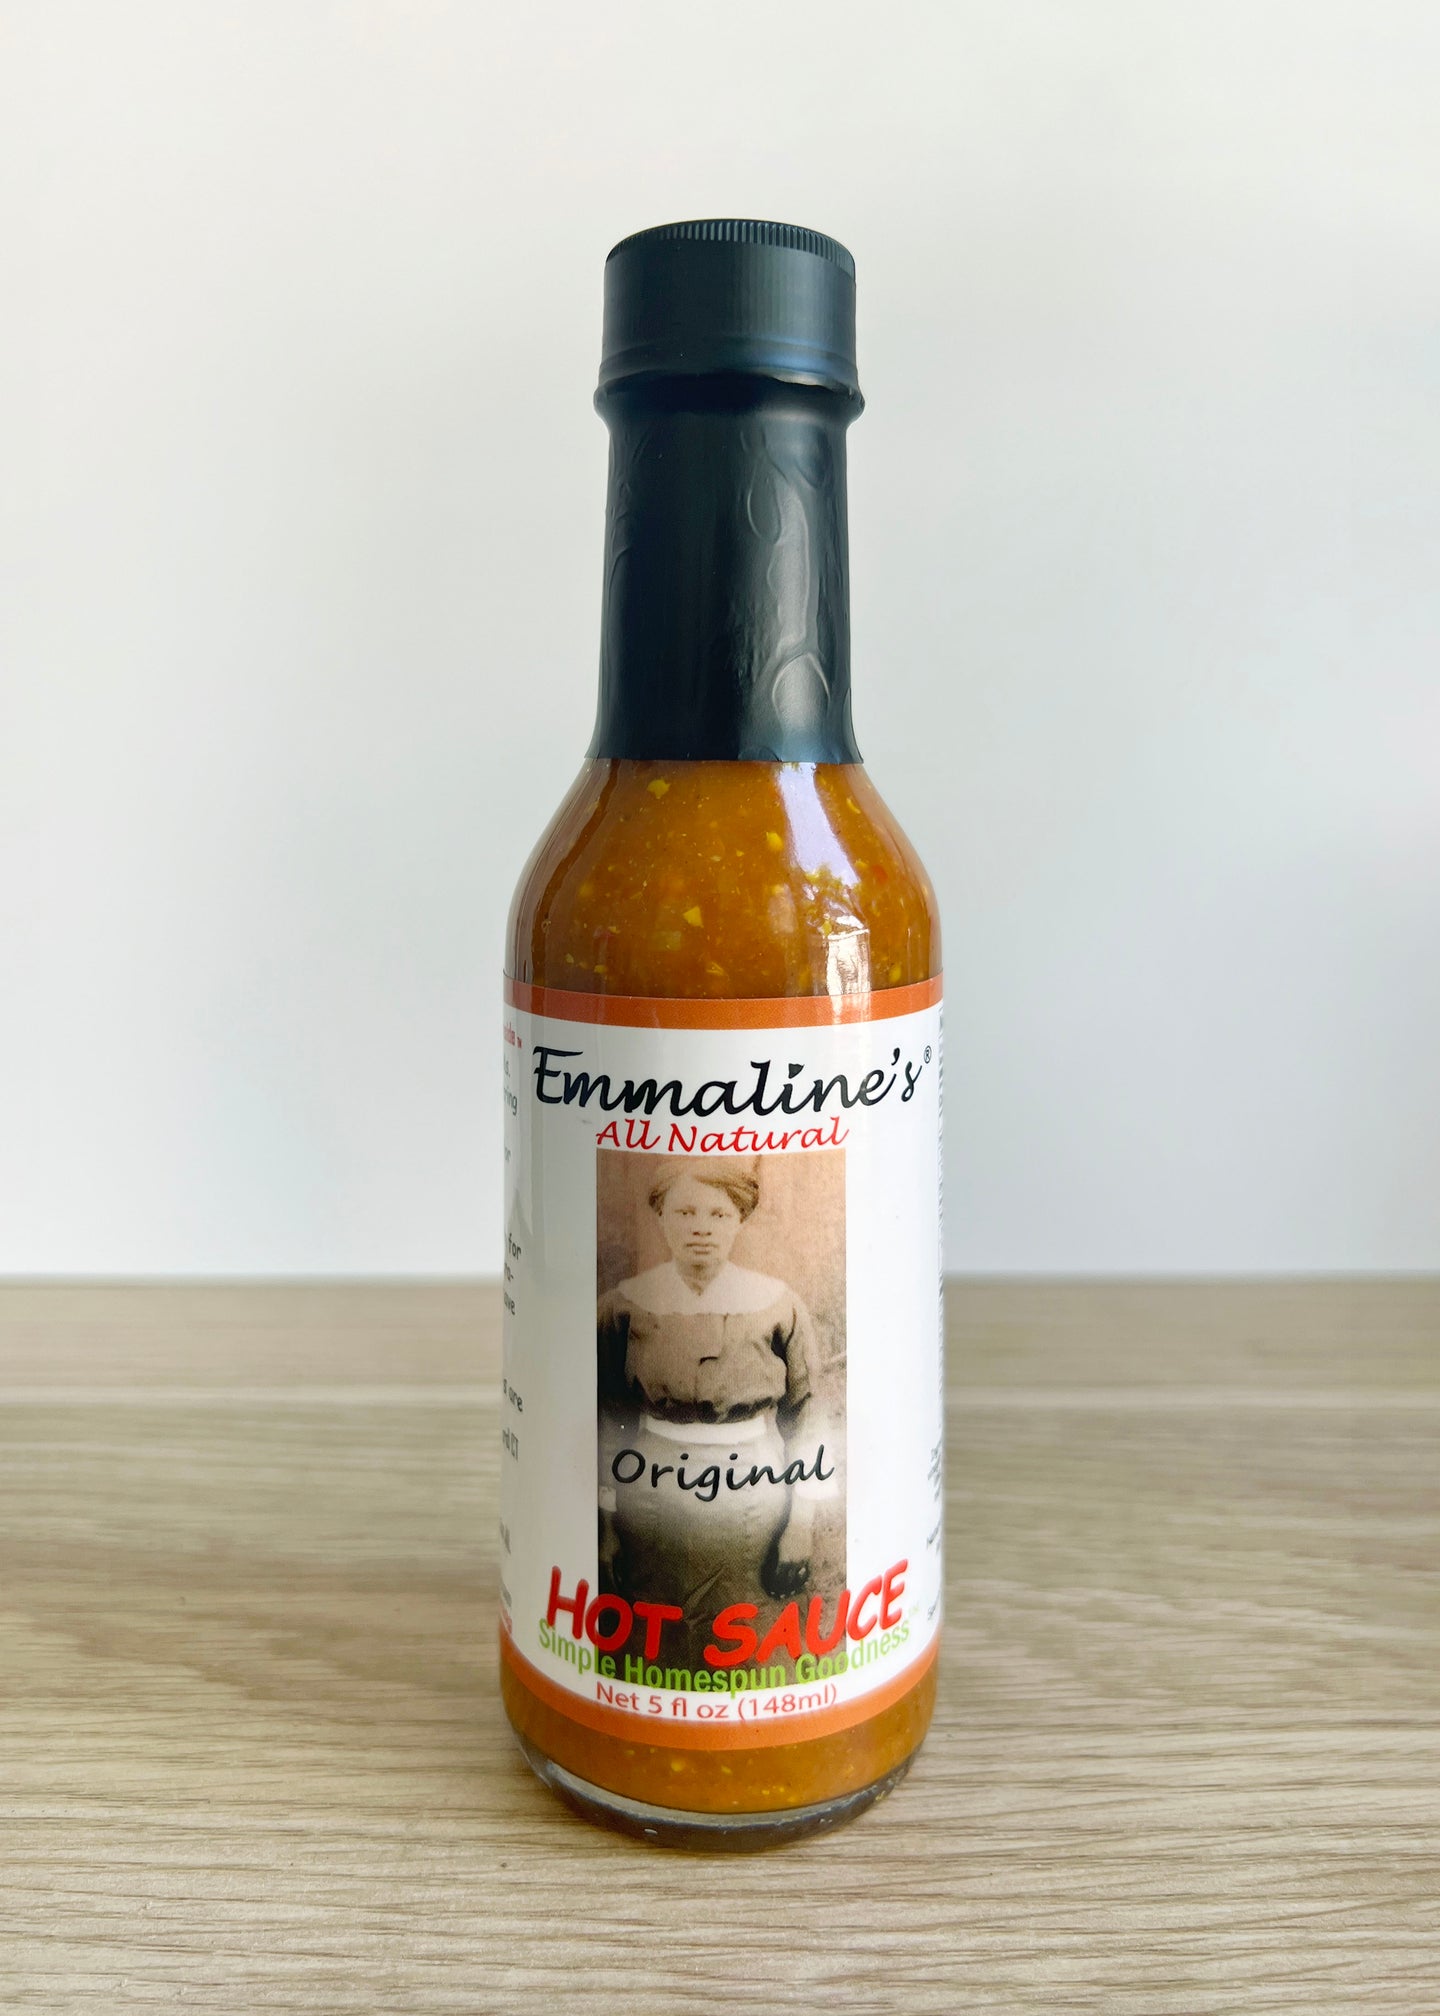 Emmaline's All Natural Original Hot Sauce 5 oz